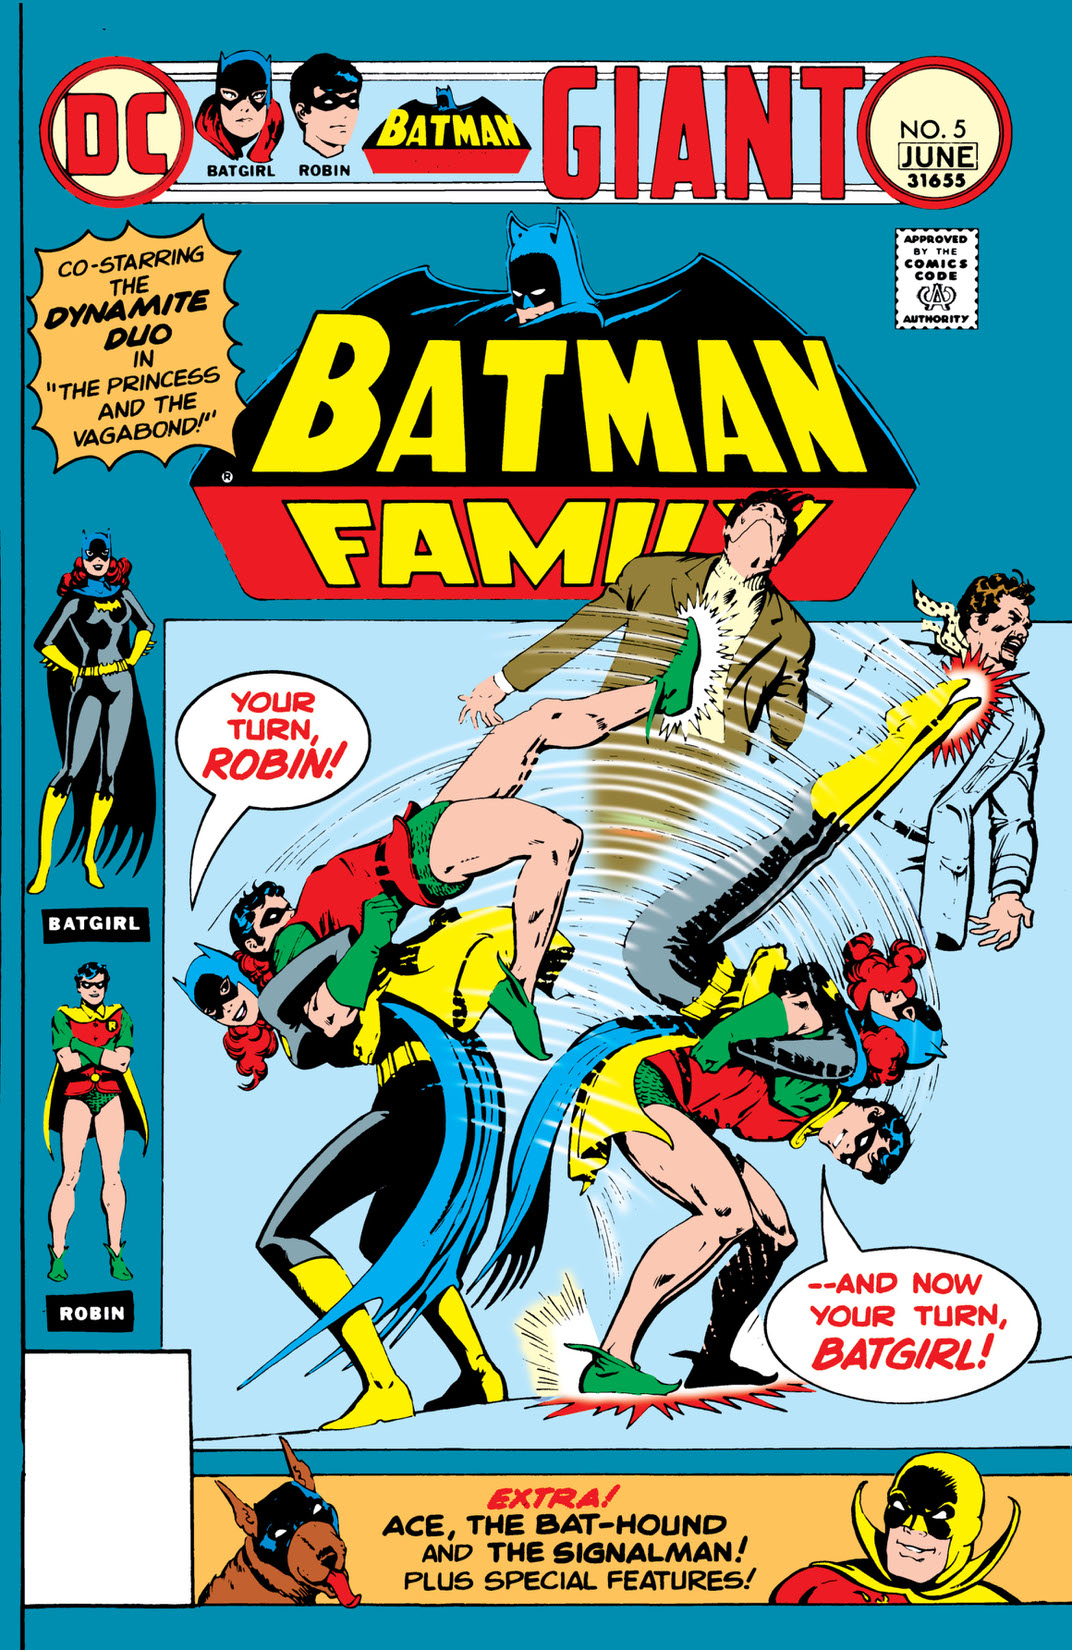 Batman Family #5 preview images